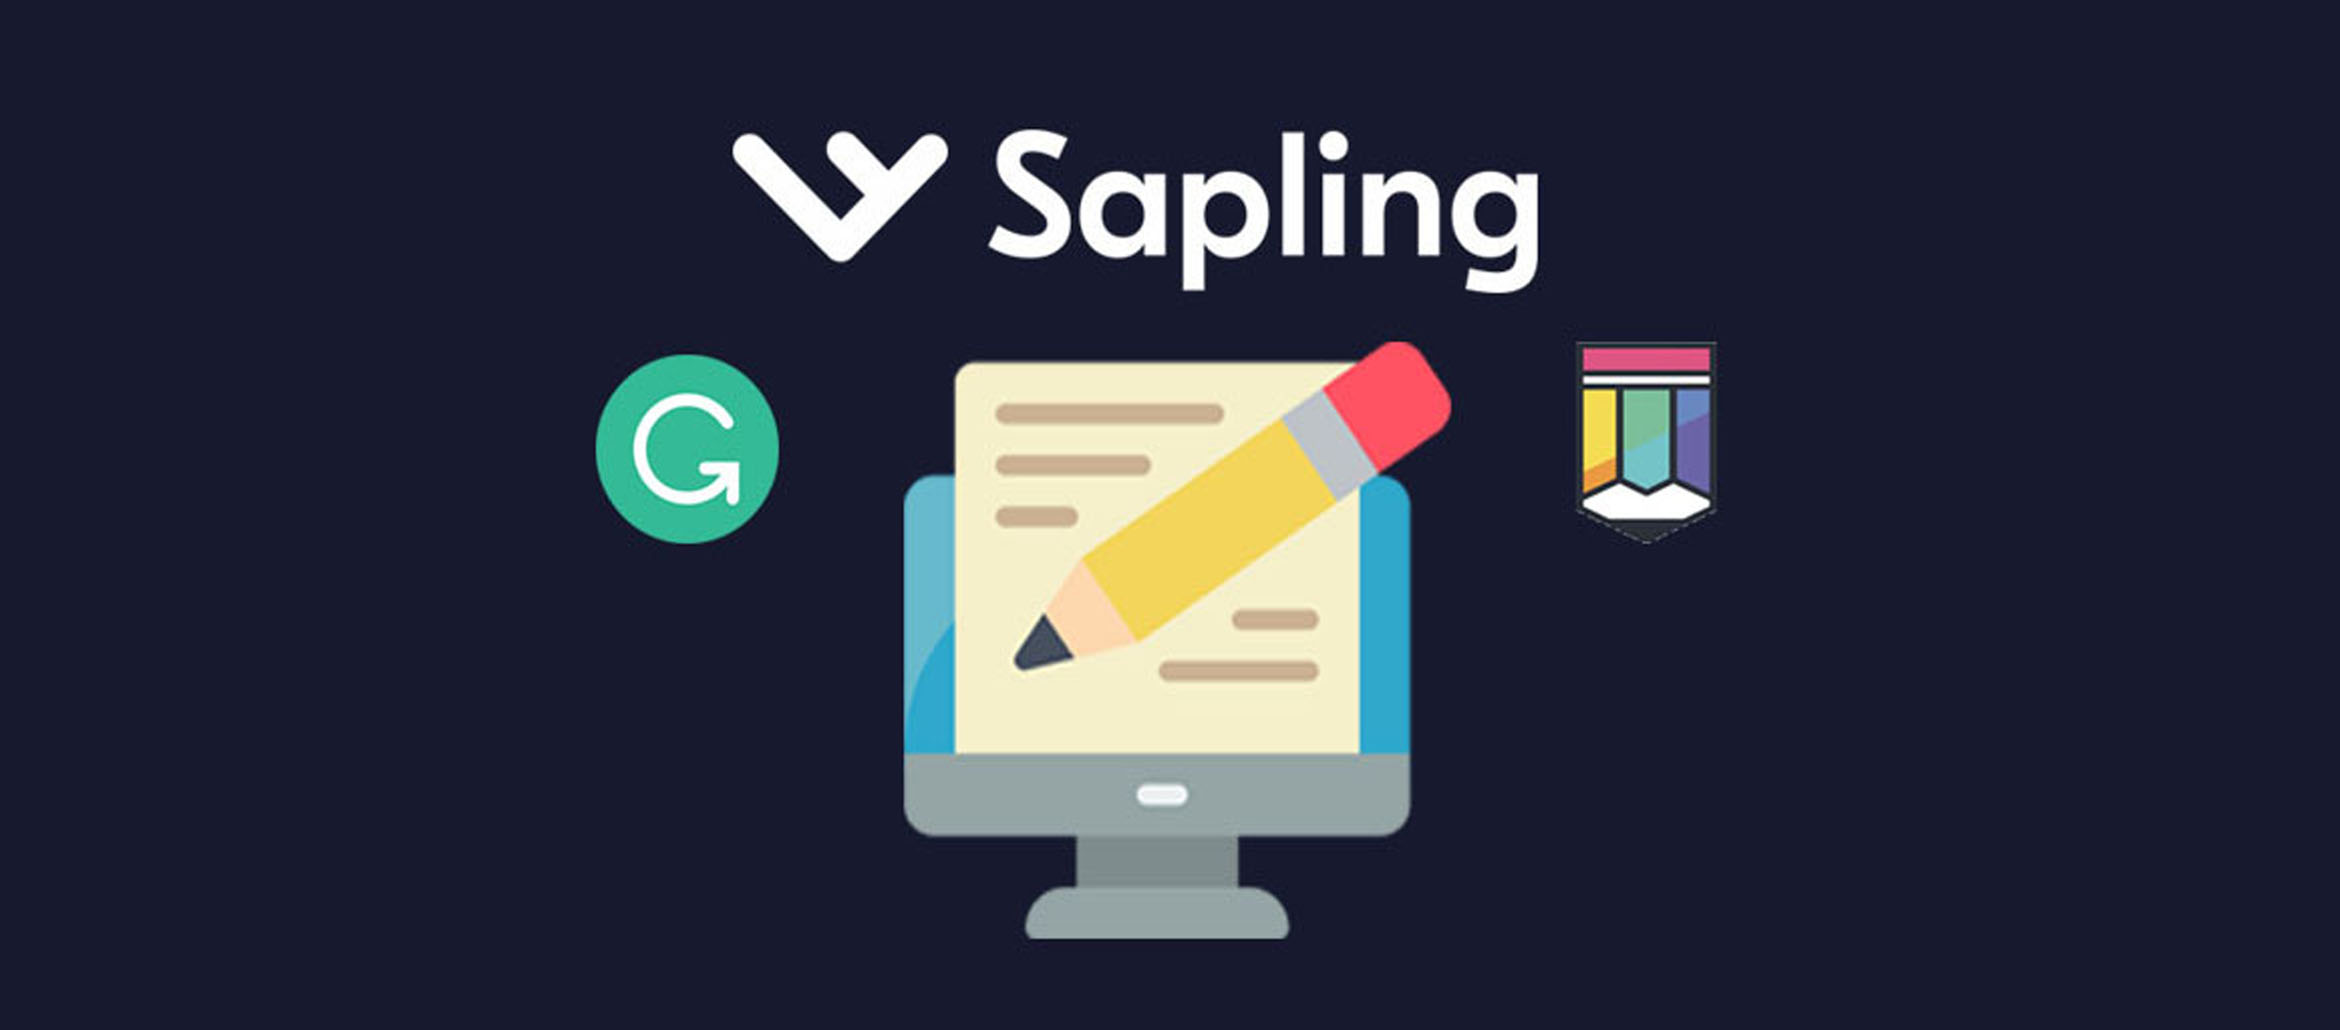 Sapling – Language models for enterprise applications